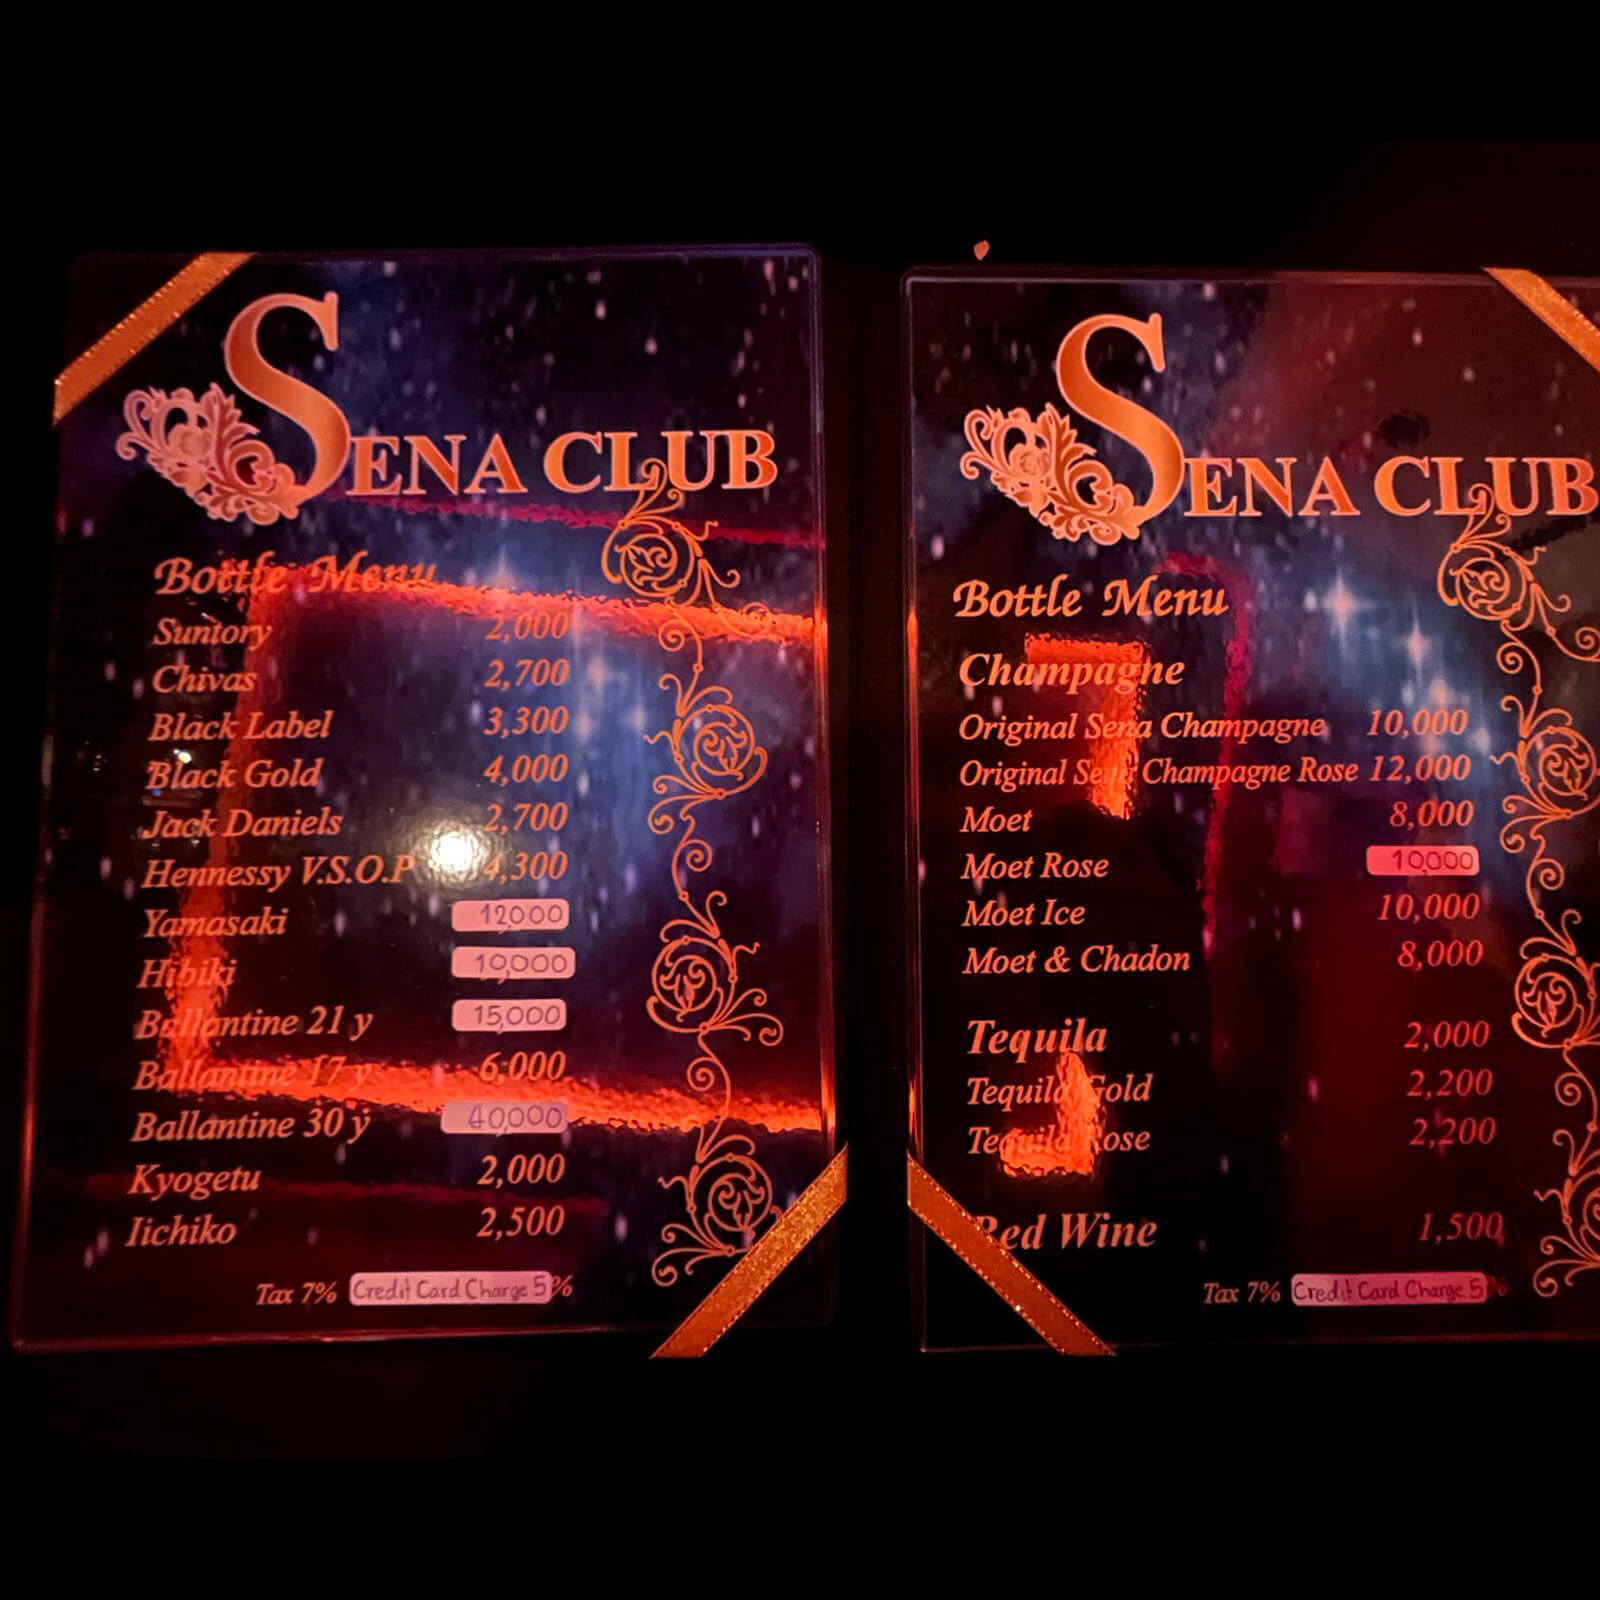 sena club menu